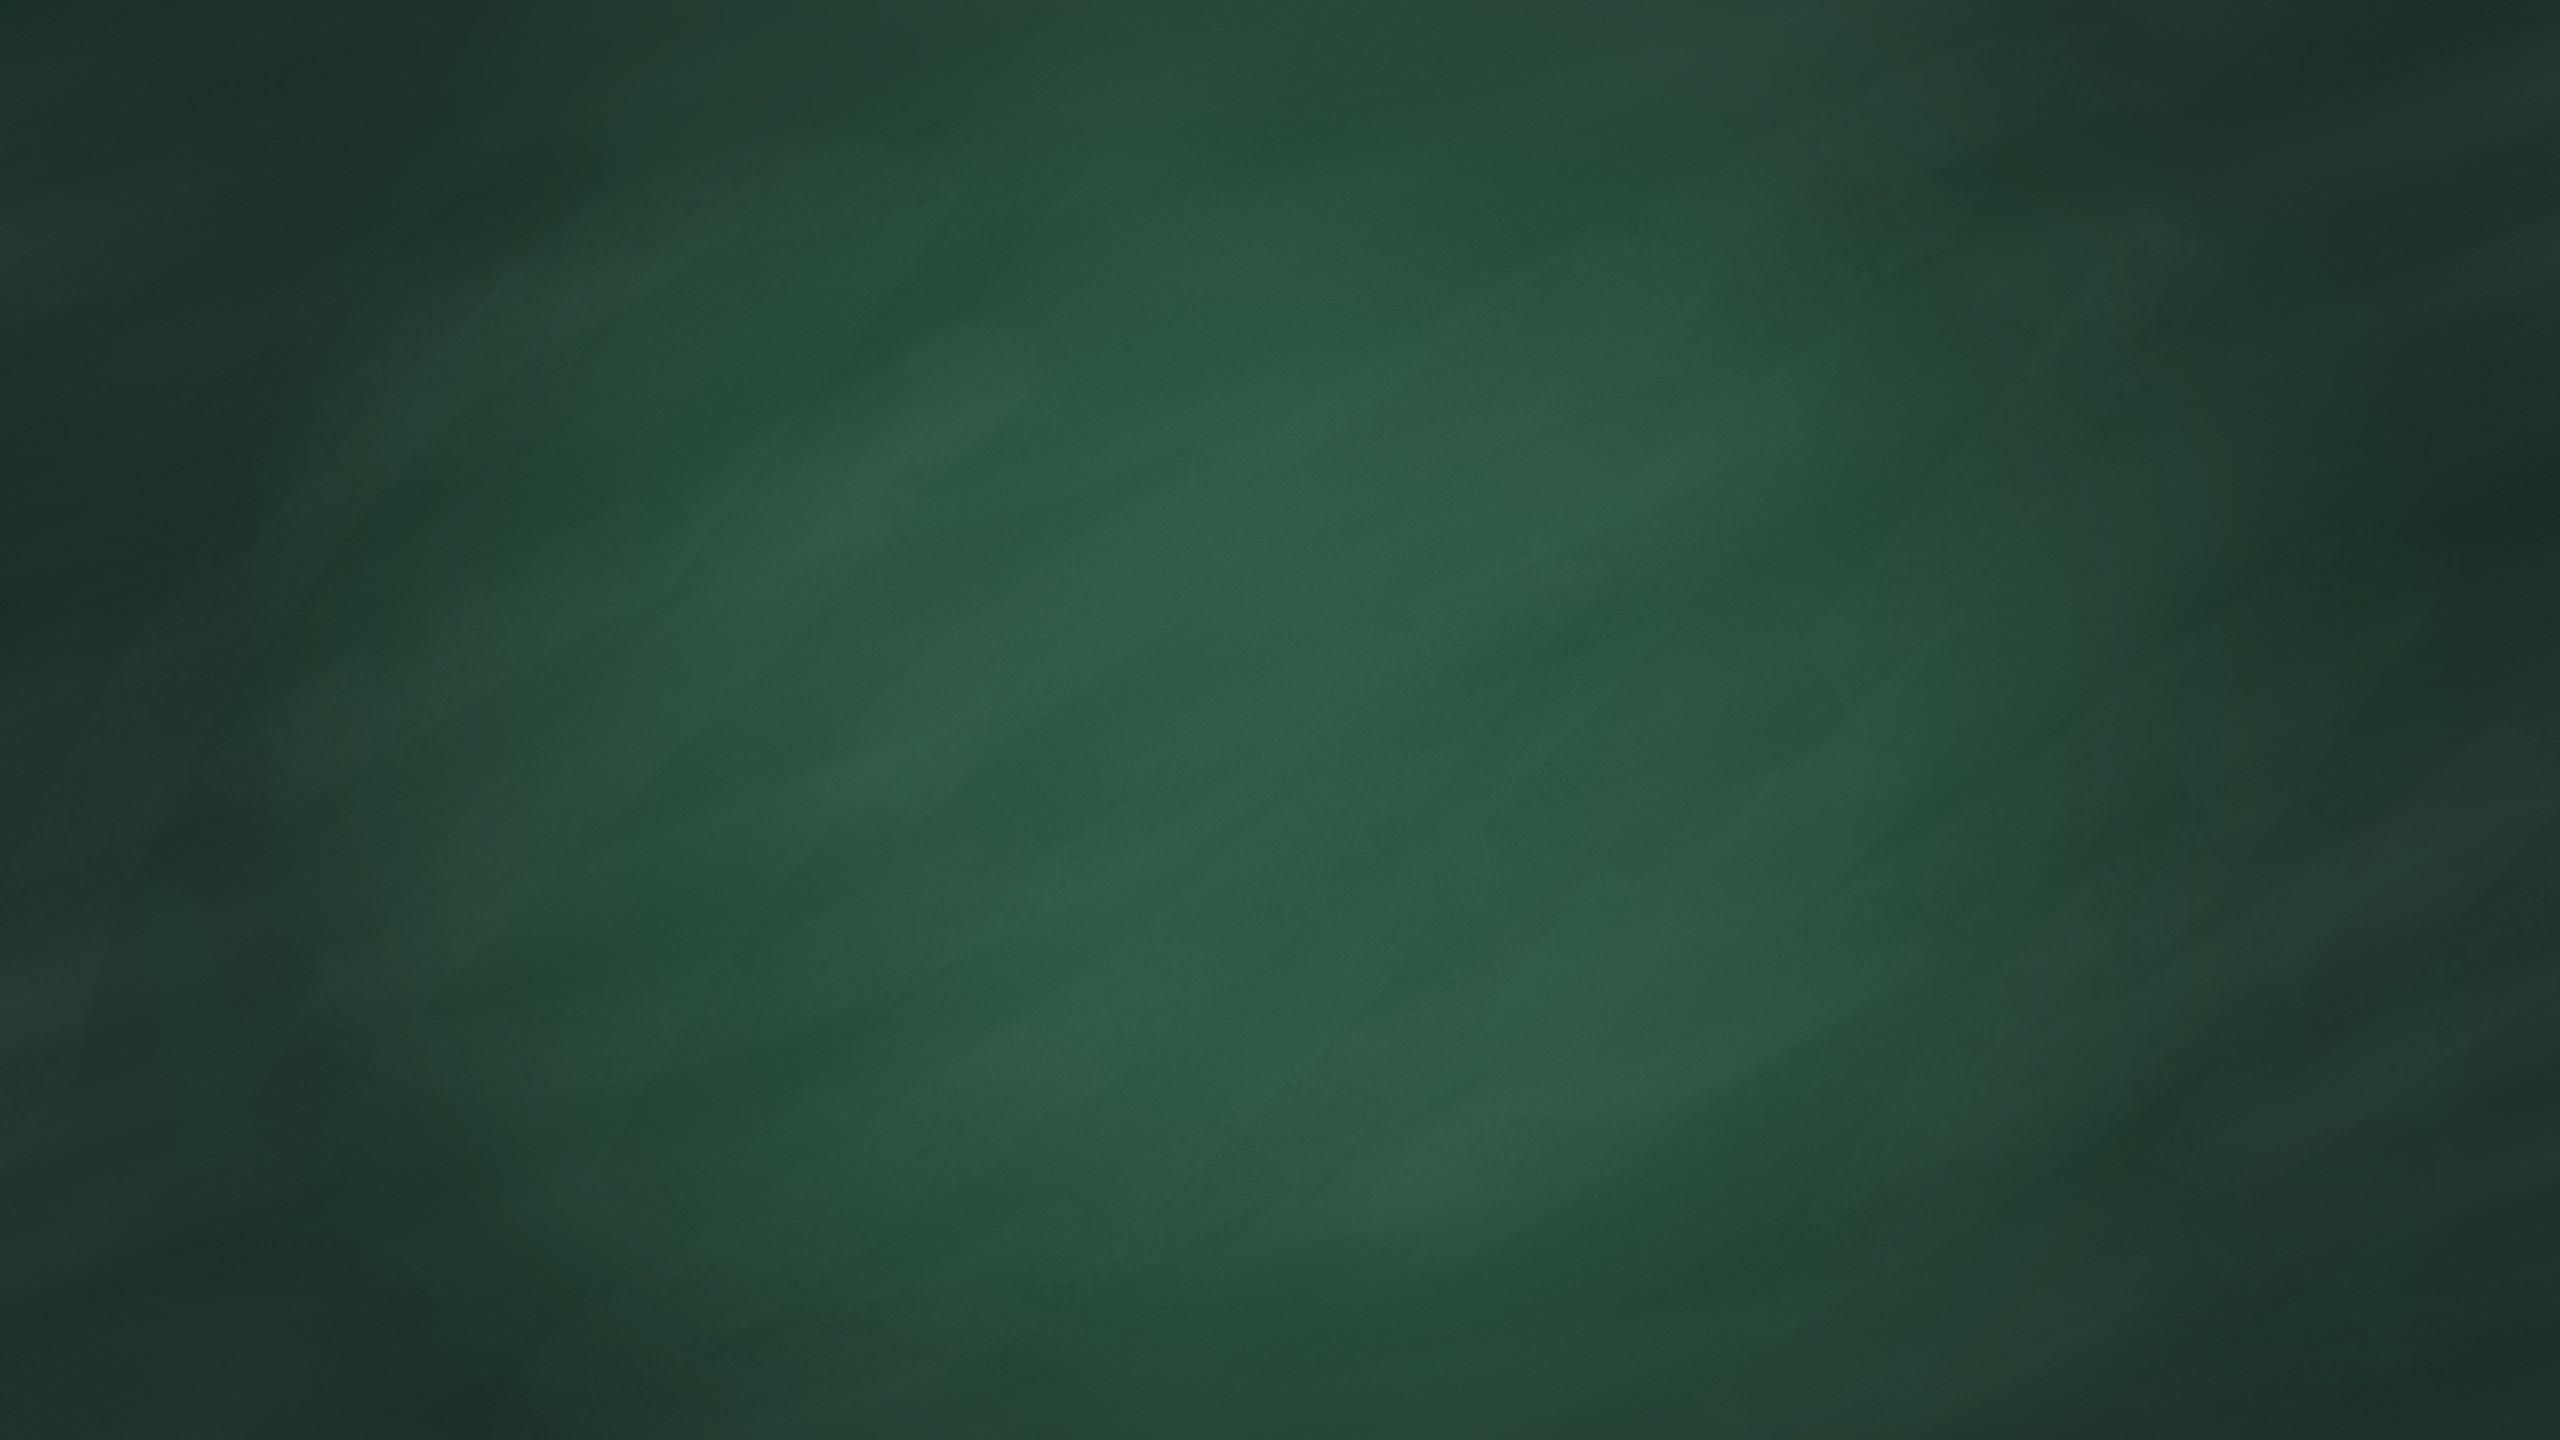 Green board wallpaper (11 Wallpaper)